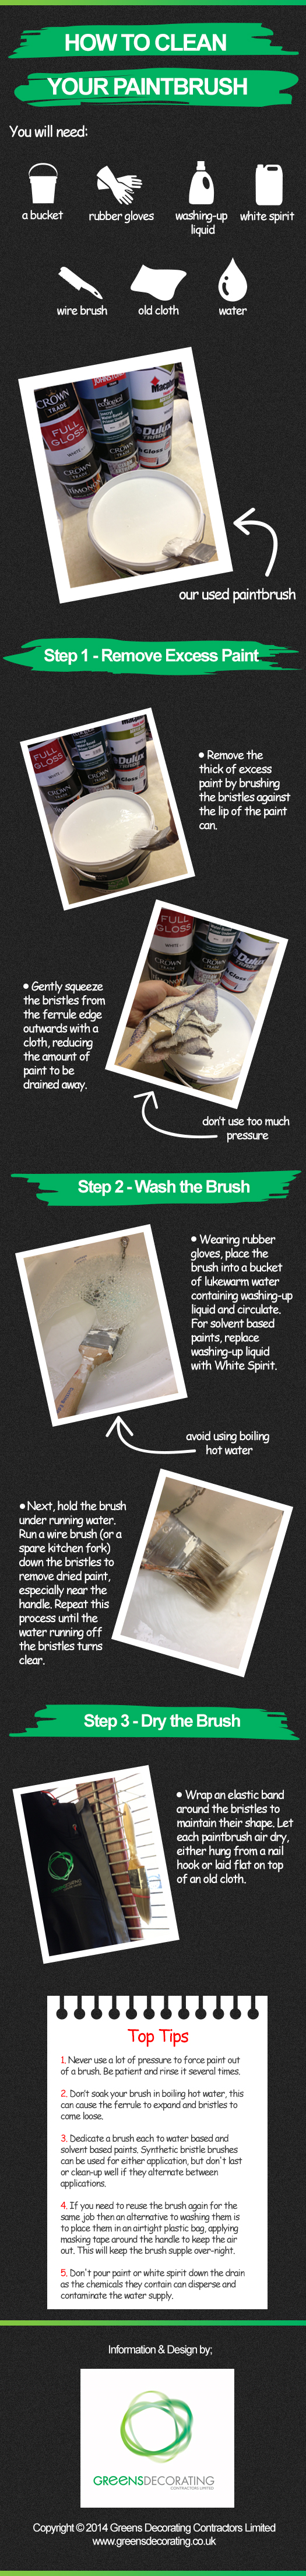 How to clean a paintbush